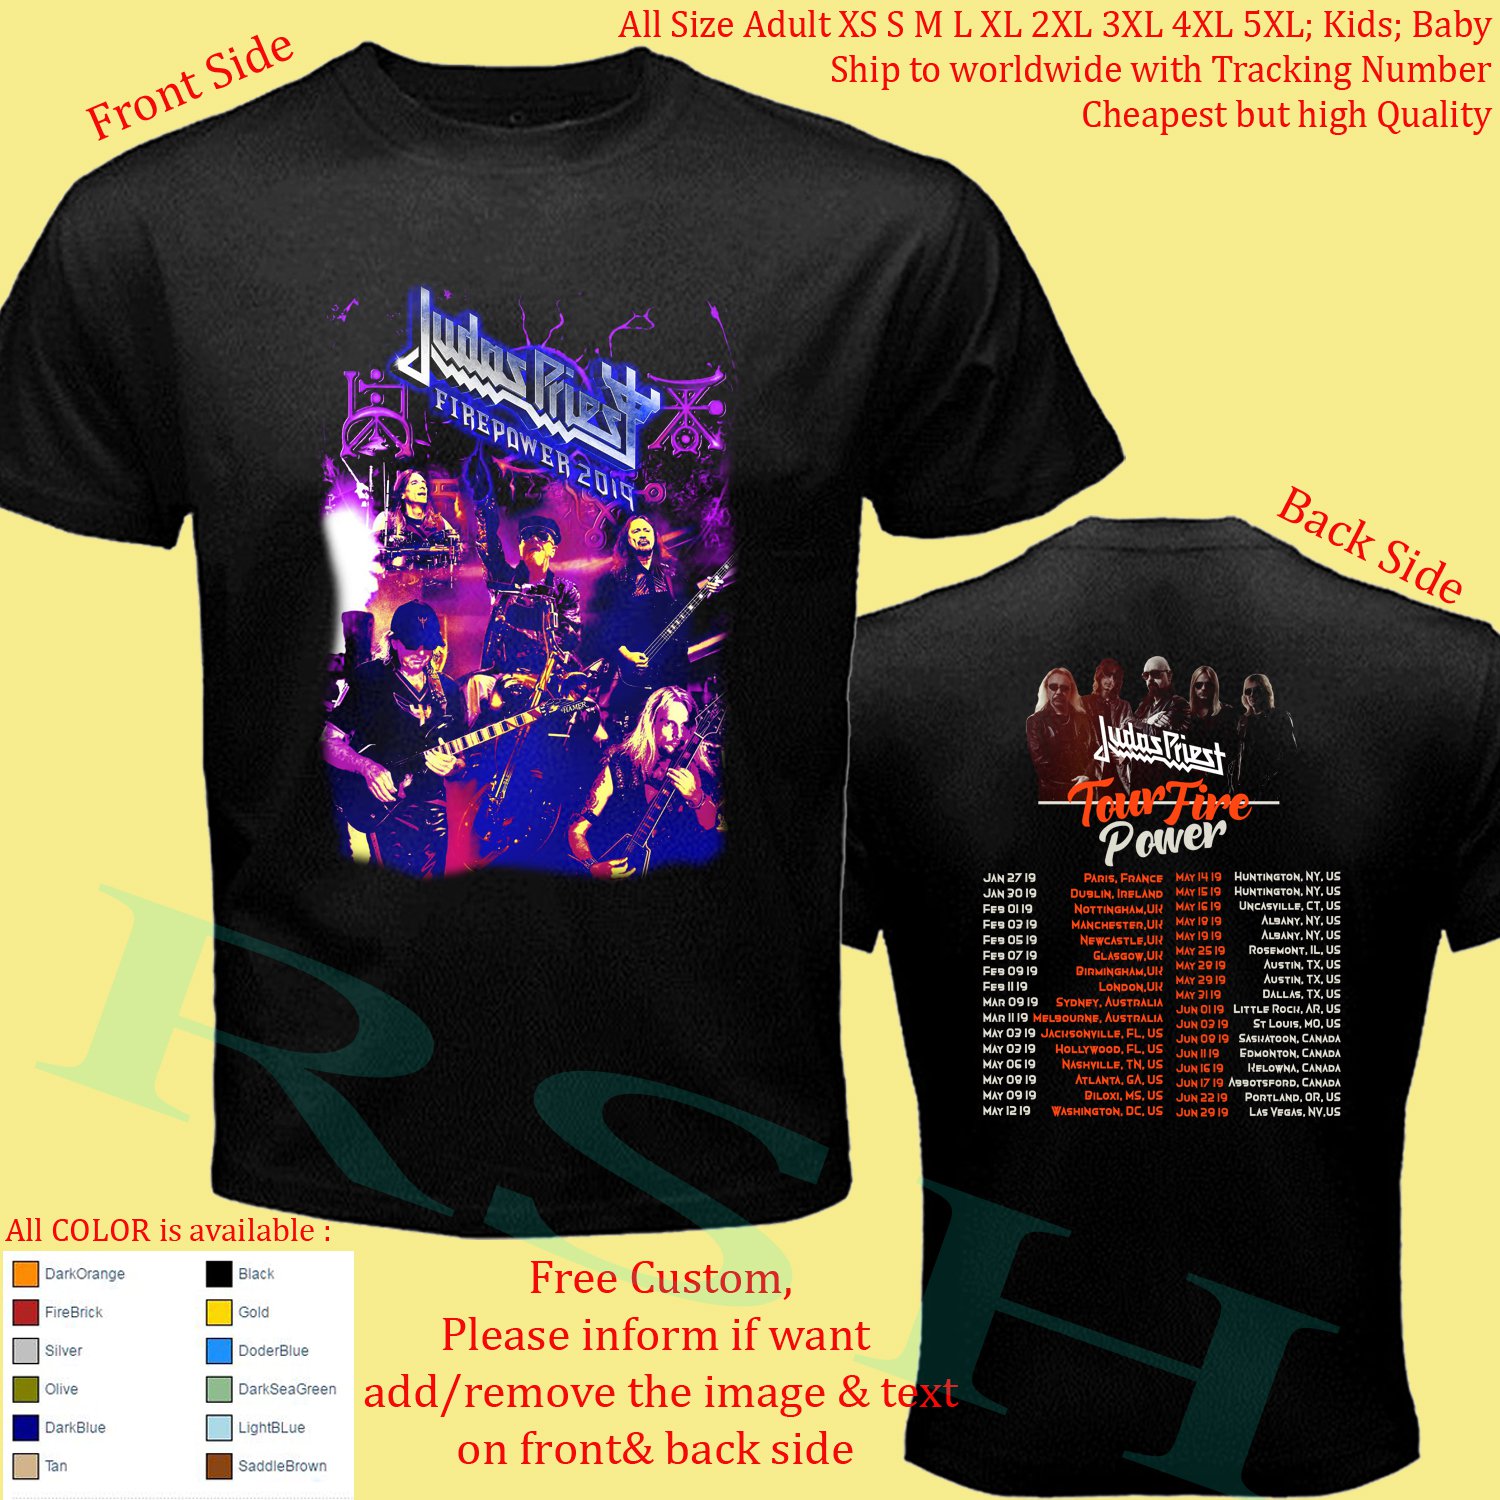 JUDAS PRIEST FIRE POWER TOUR Concert tour T-shirt all size Adult S-5XL ...